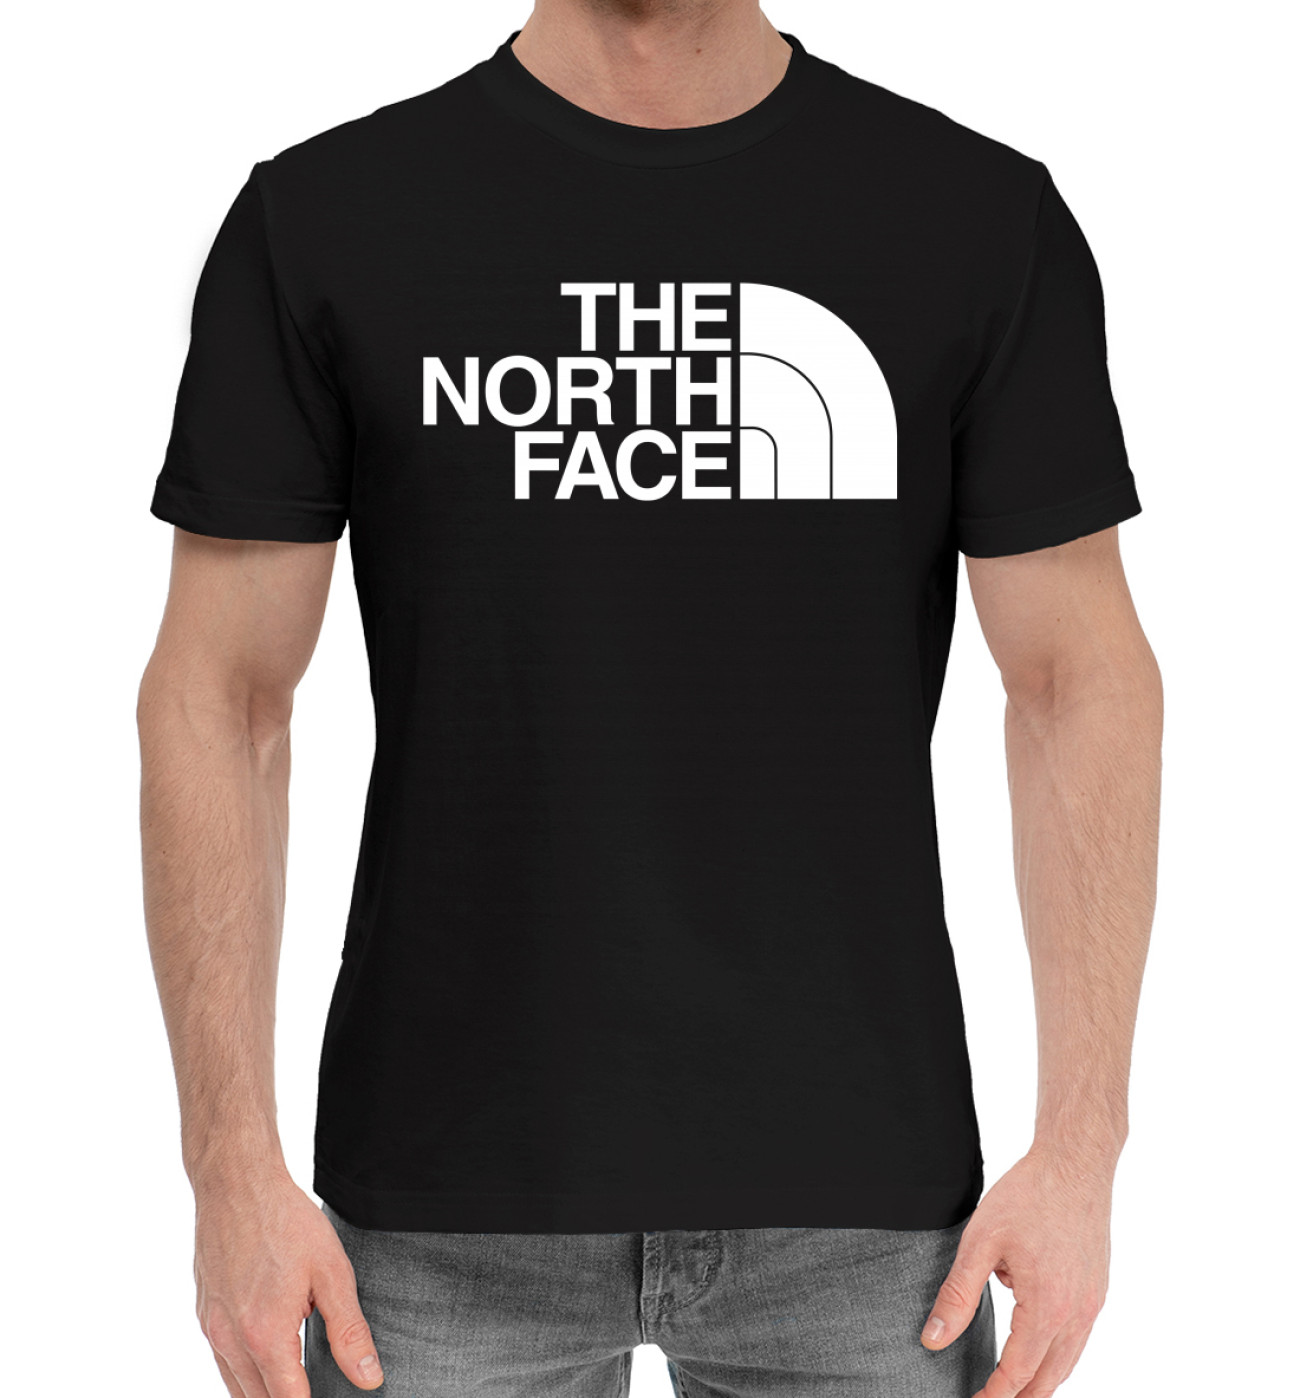 Мужская Хлопковая футболка The North Face, артикул: TNA-386449-hfu-2